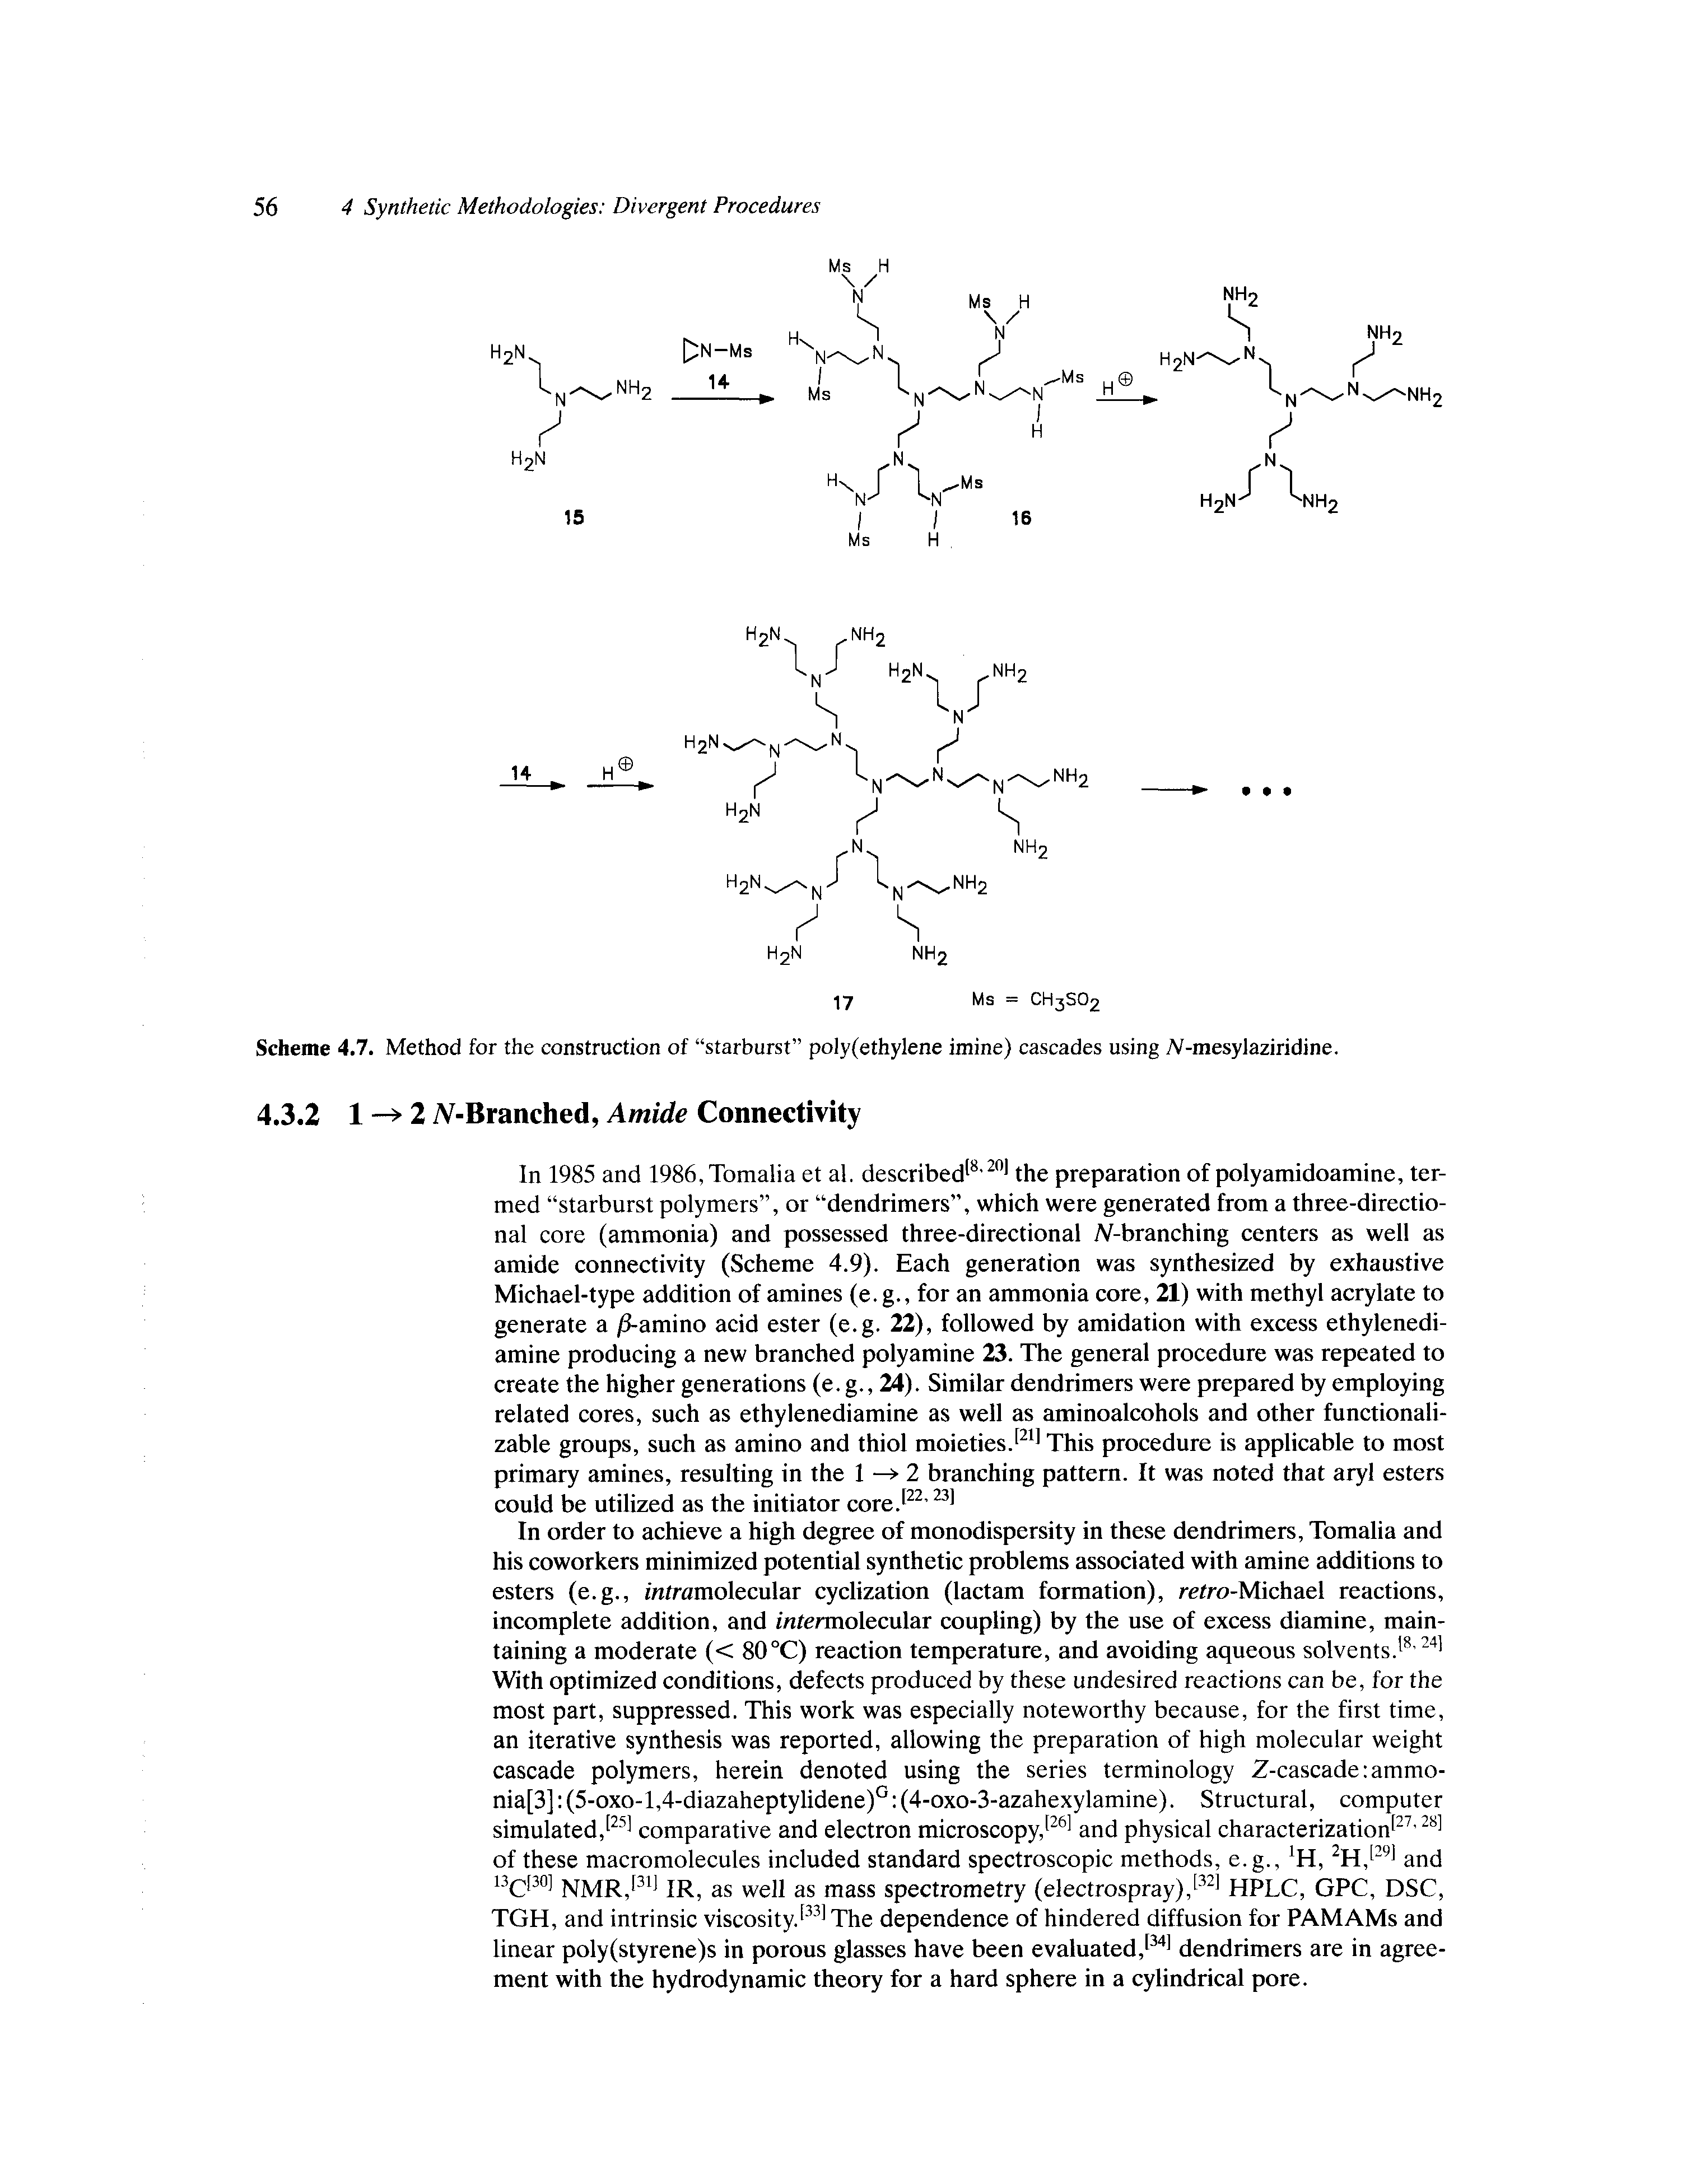 Scheme 4.7. Method for the construction of starburst poly(ethylene imine) cascades using N-mesylaziridine.